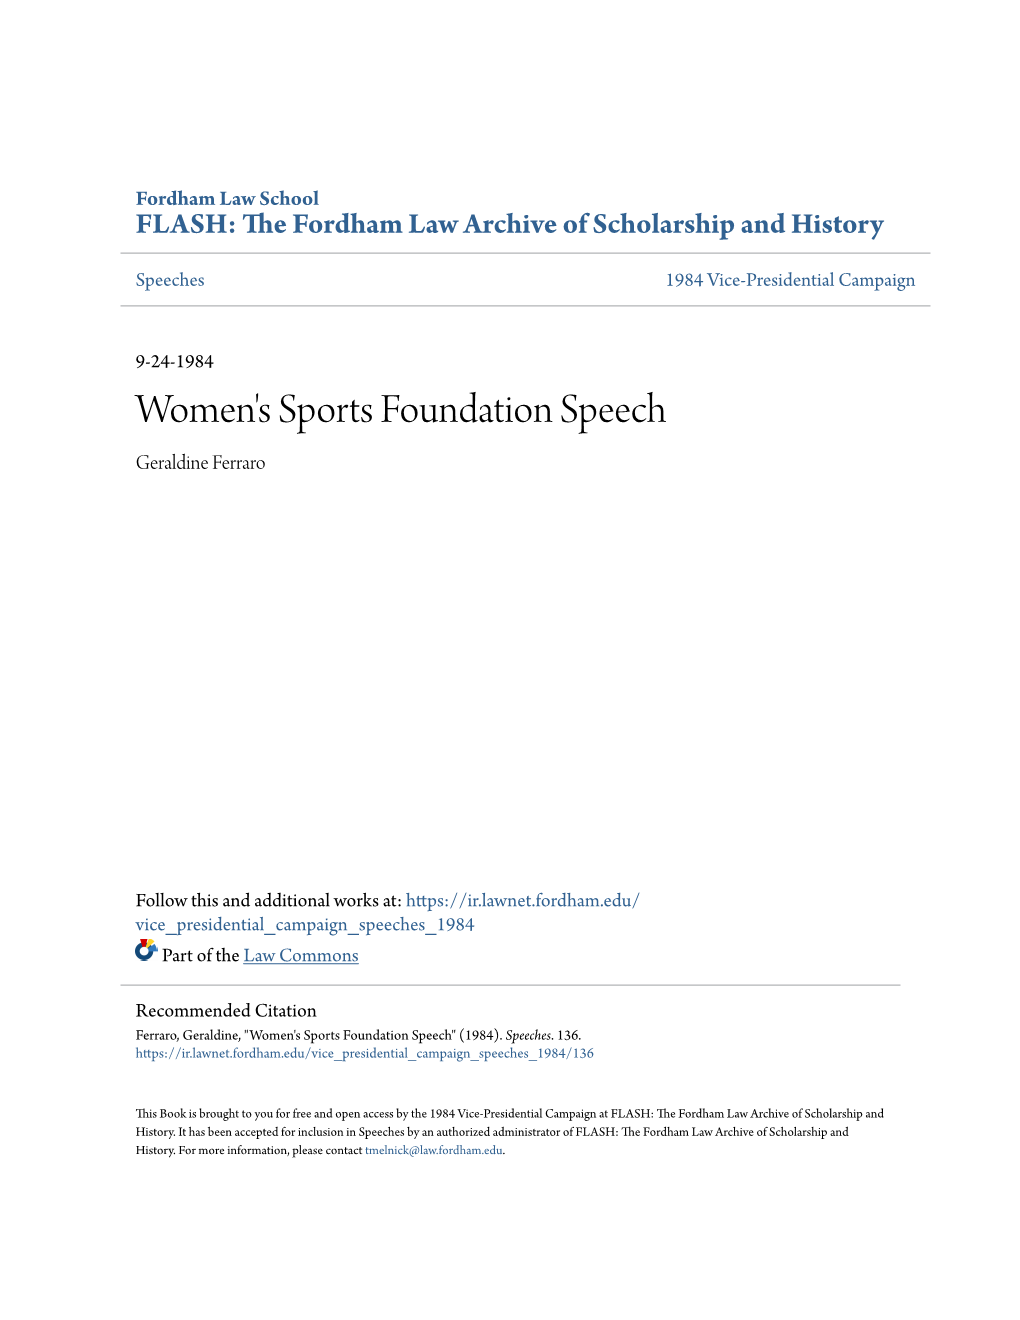 Women's Sports Foundation Speech Geraldine Ferraro